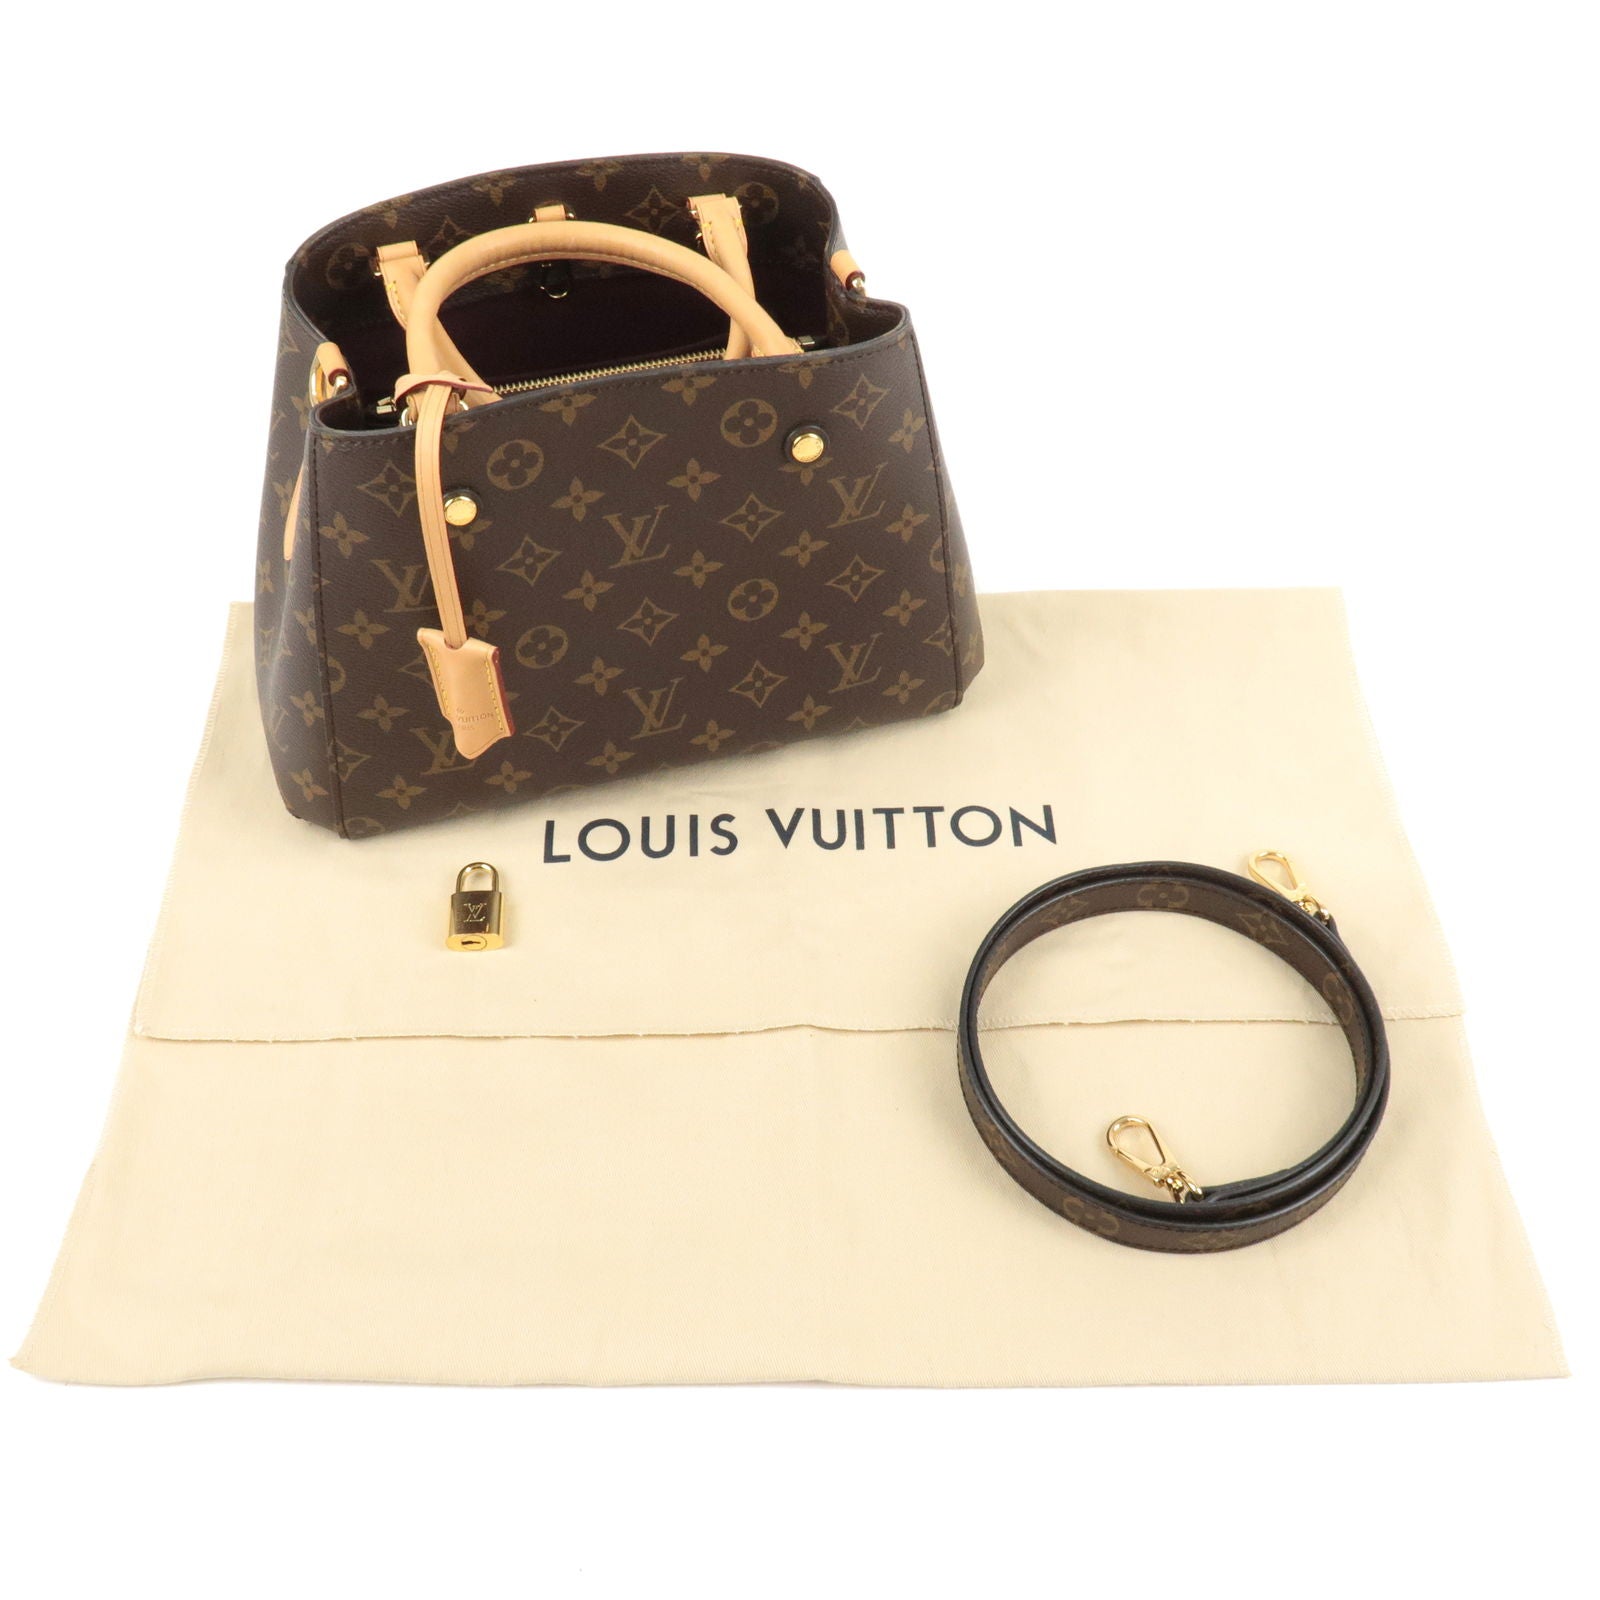 LOUIS VUITTON Montaigne BB Handbag Monogram M41055 2way shoulder bag